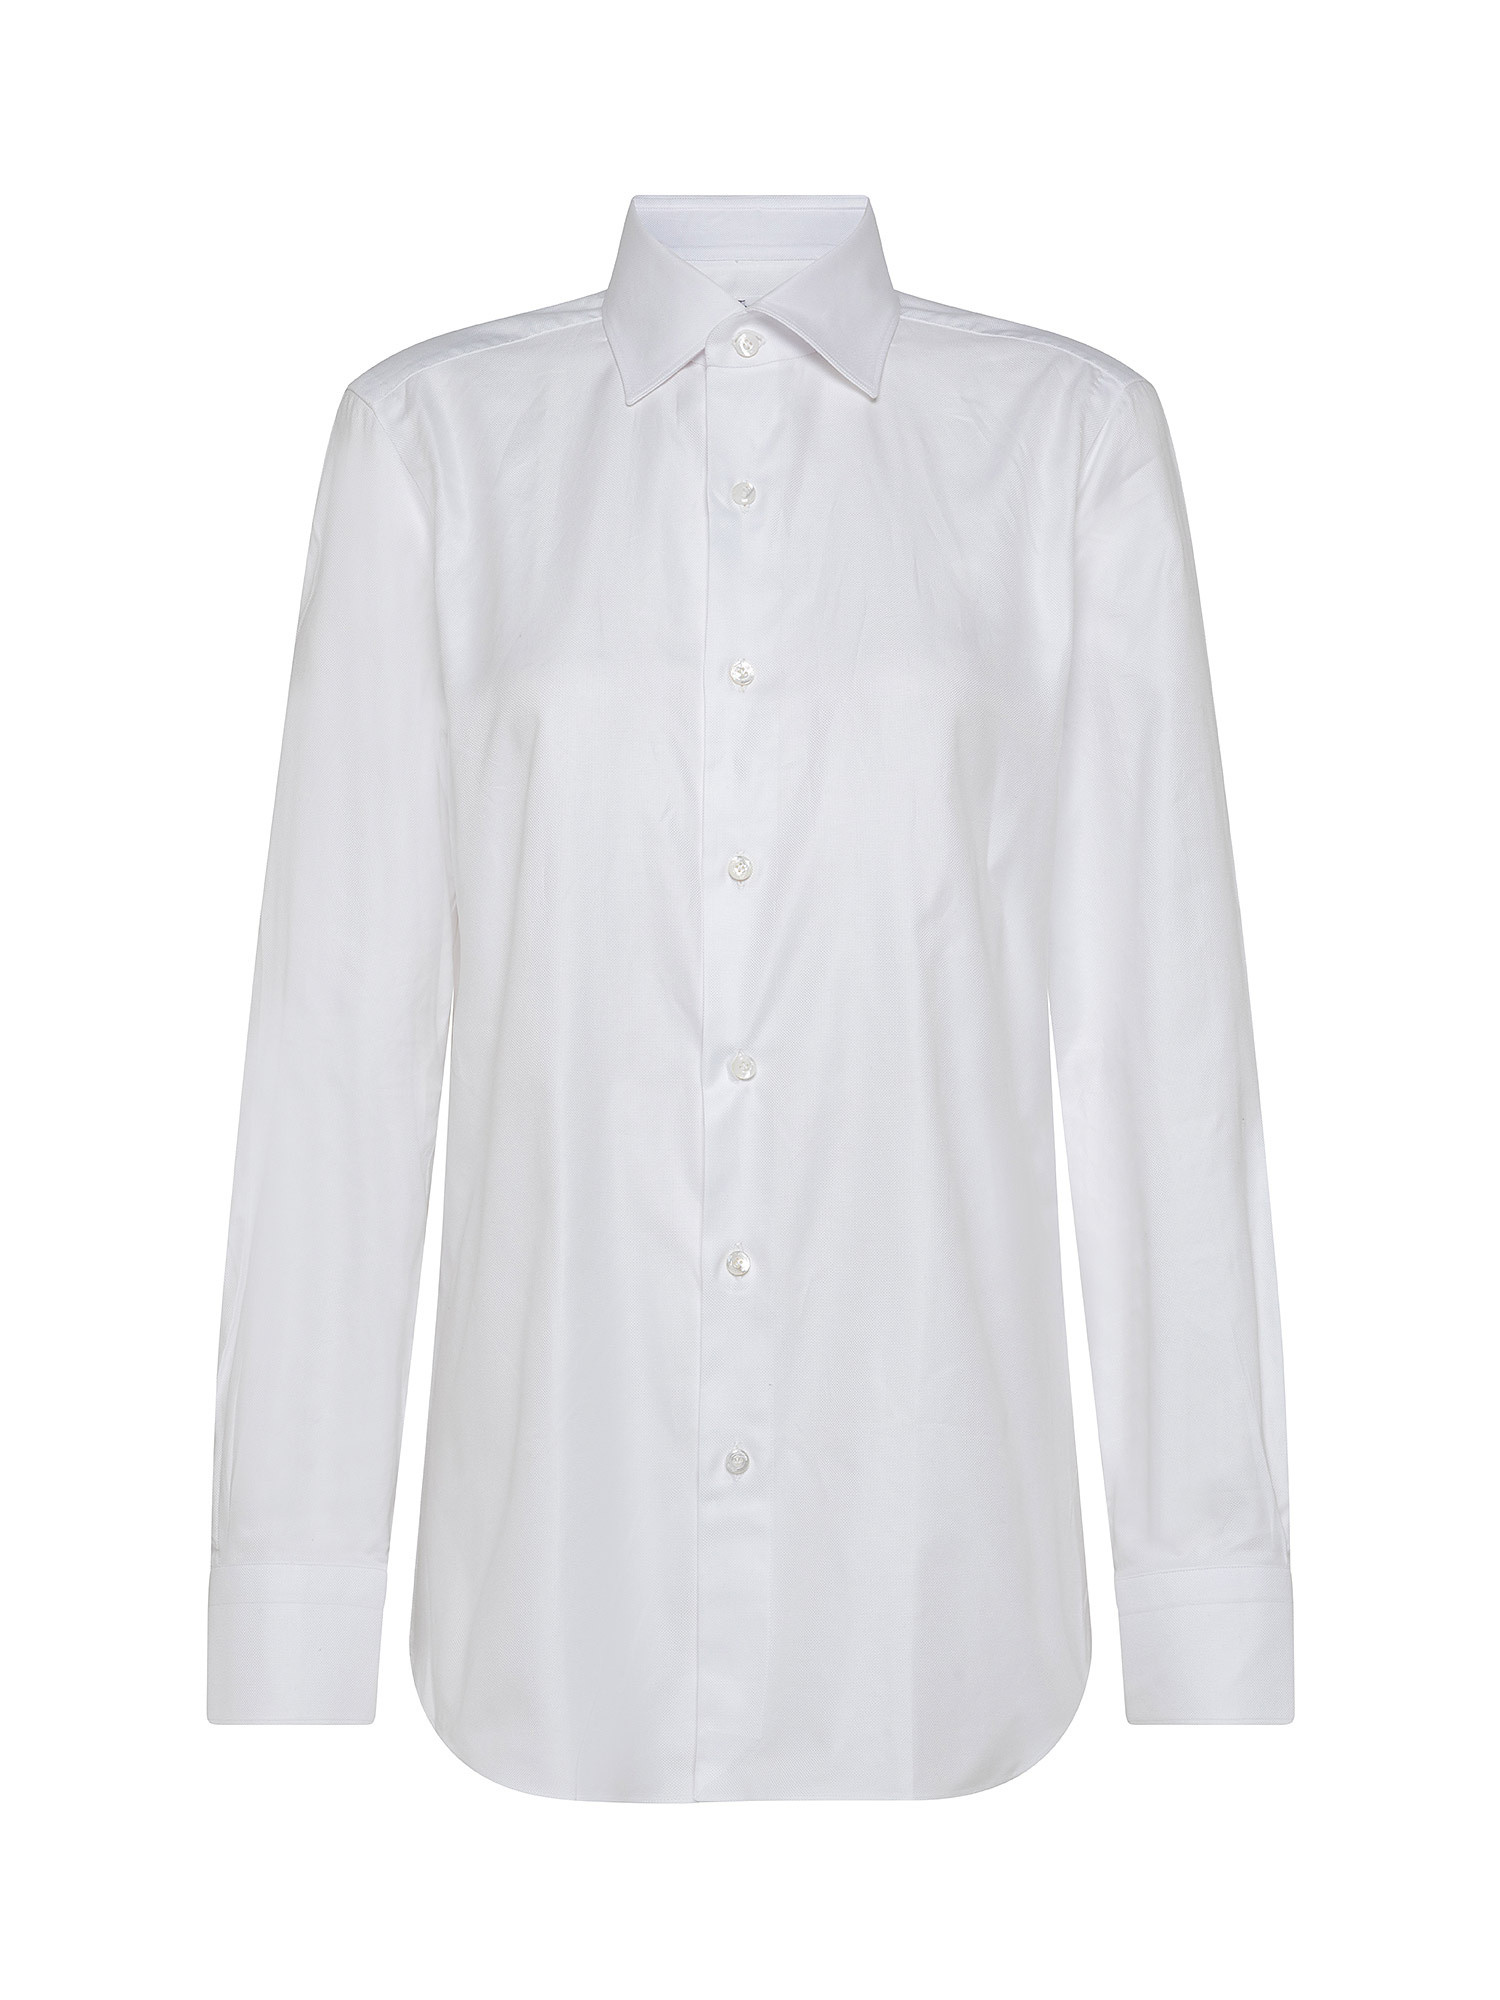 Men's slim fit shirt, White, large image number 0